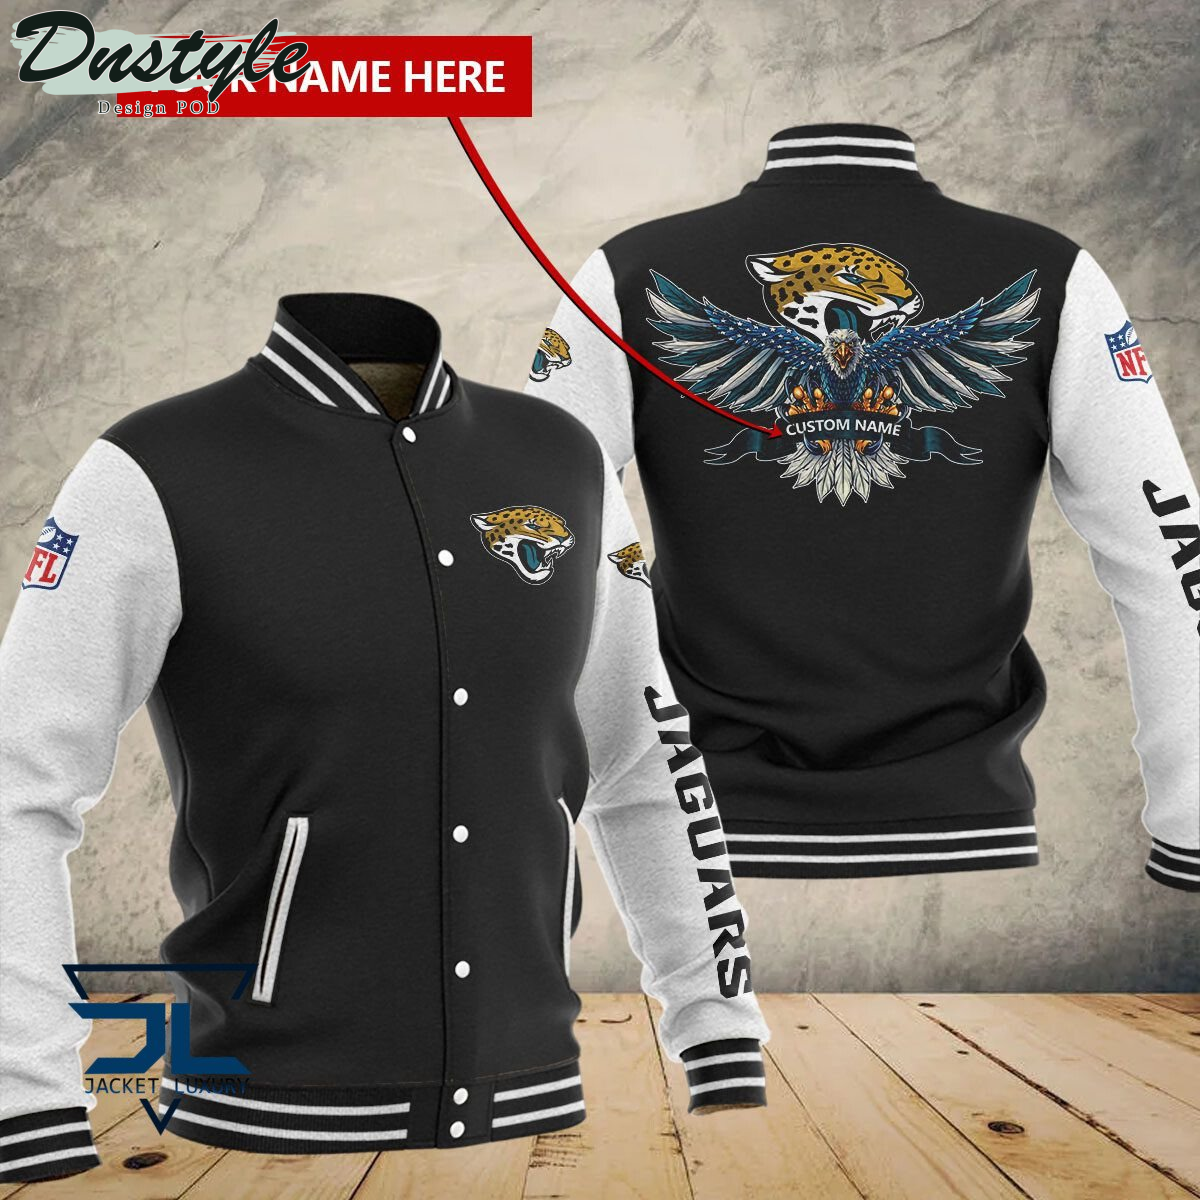 Jacksonville Jaguars Eagles Custom Name Baseball Jacket